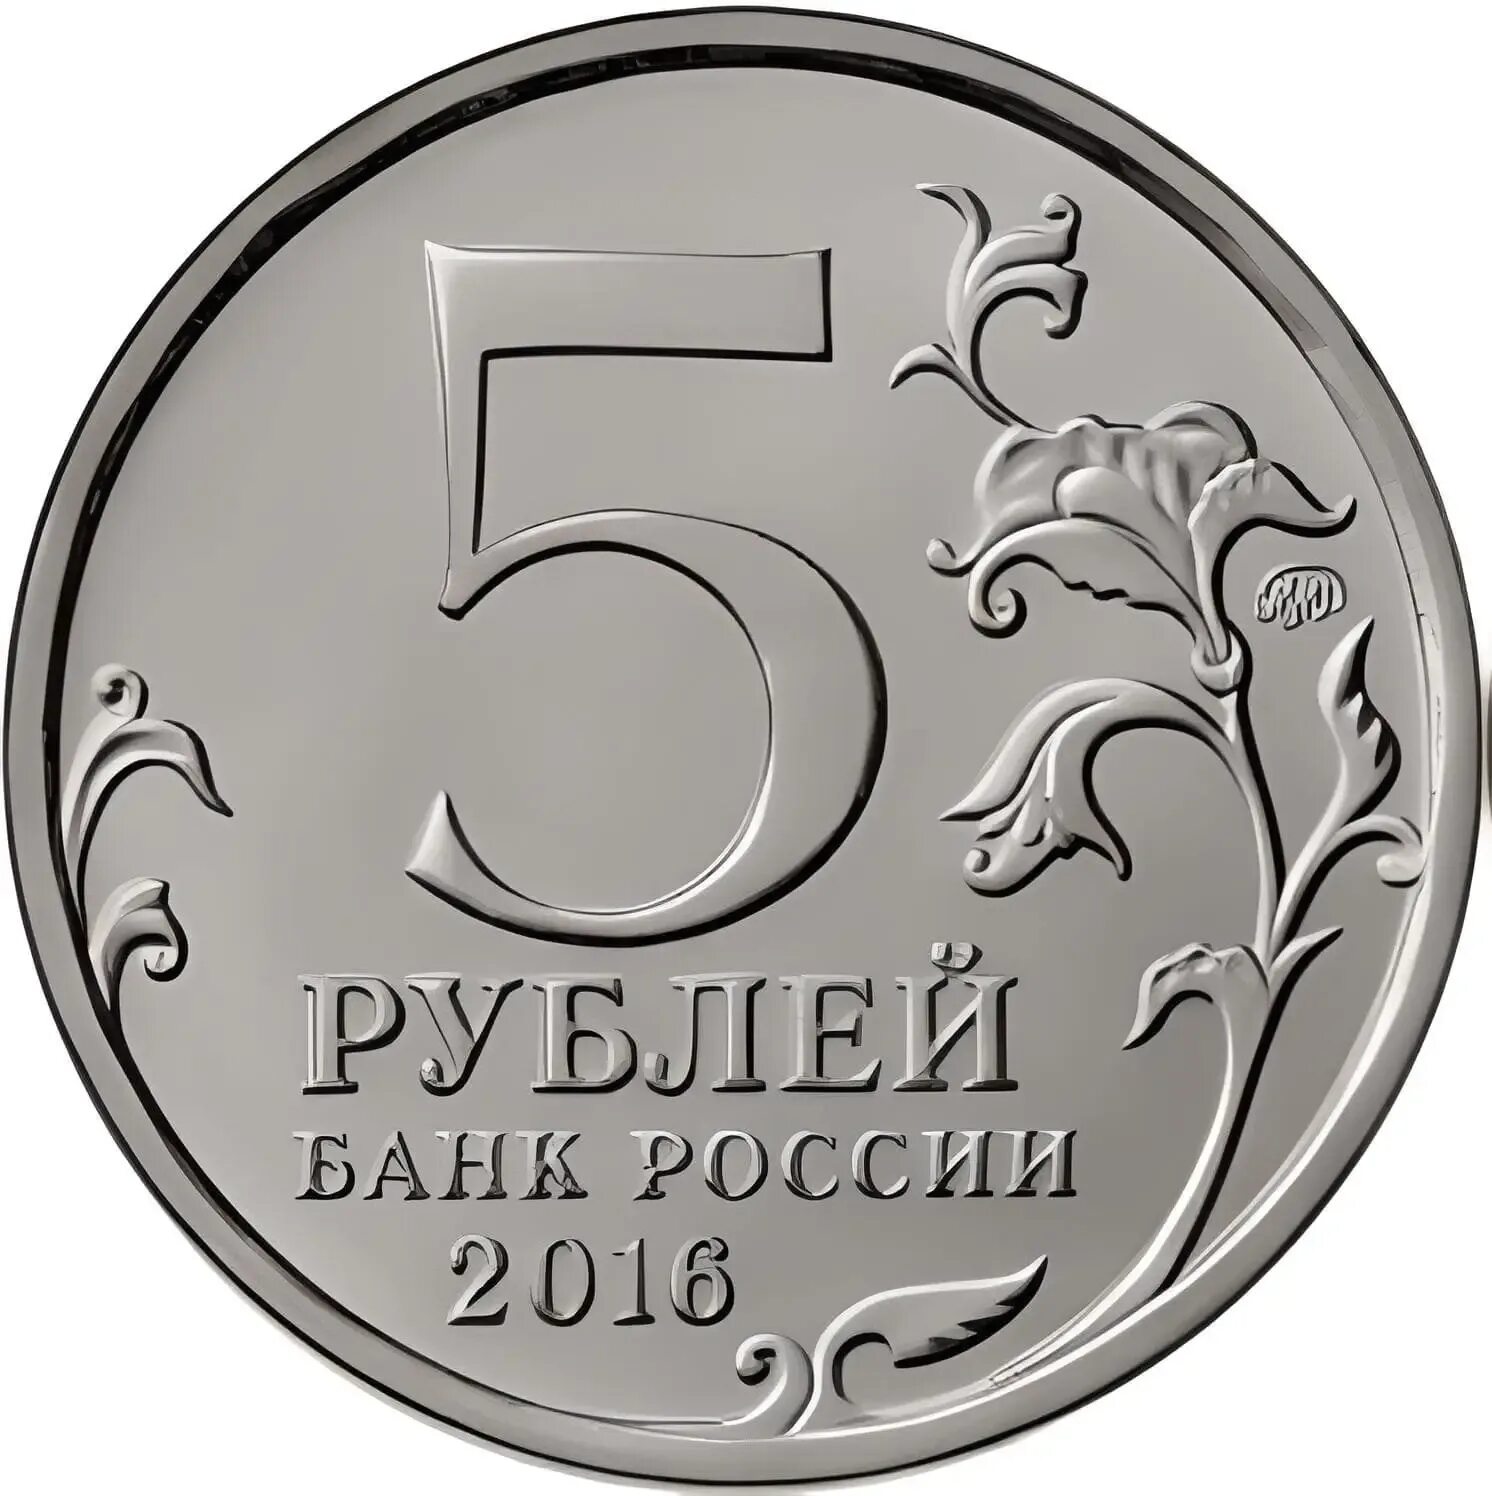 5 рублей материал. Монета 5 рублей. Изображение 5 рублей. Монета 2 рубля на прозрачном фоне. Монета 5 руб для фотошопа.